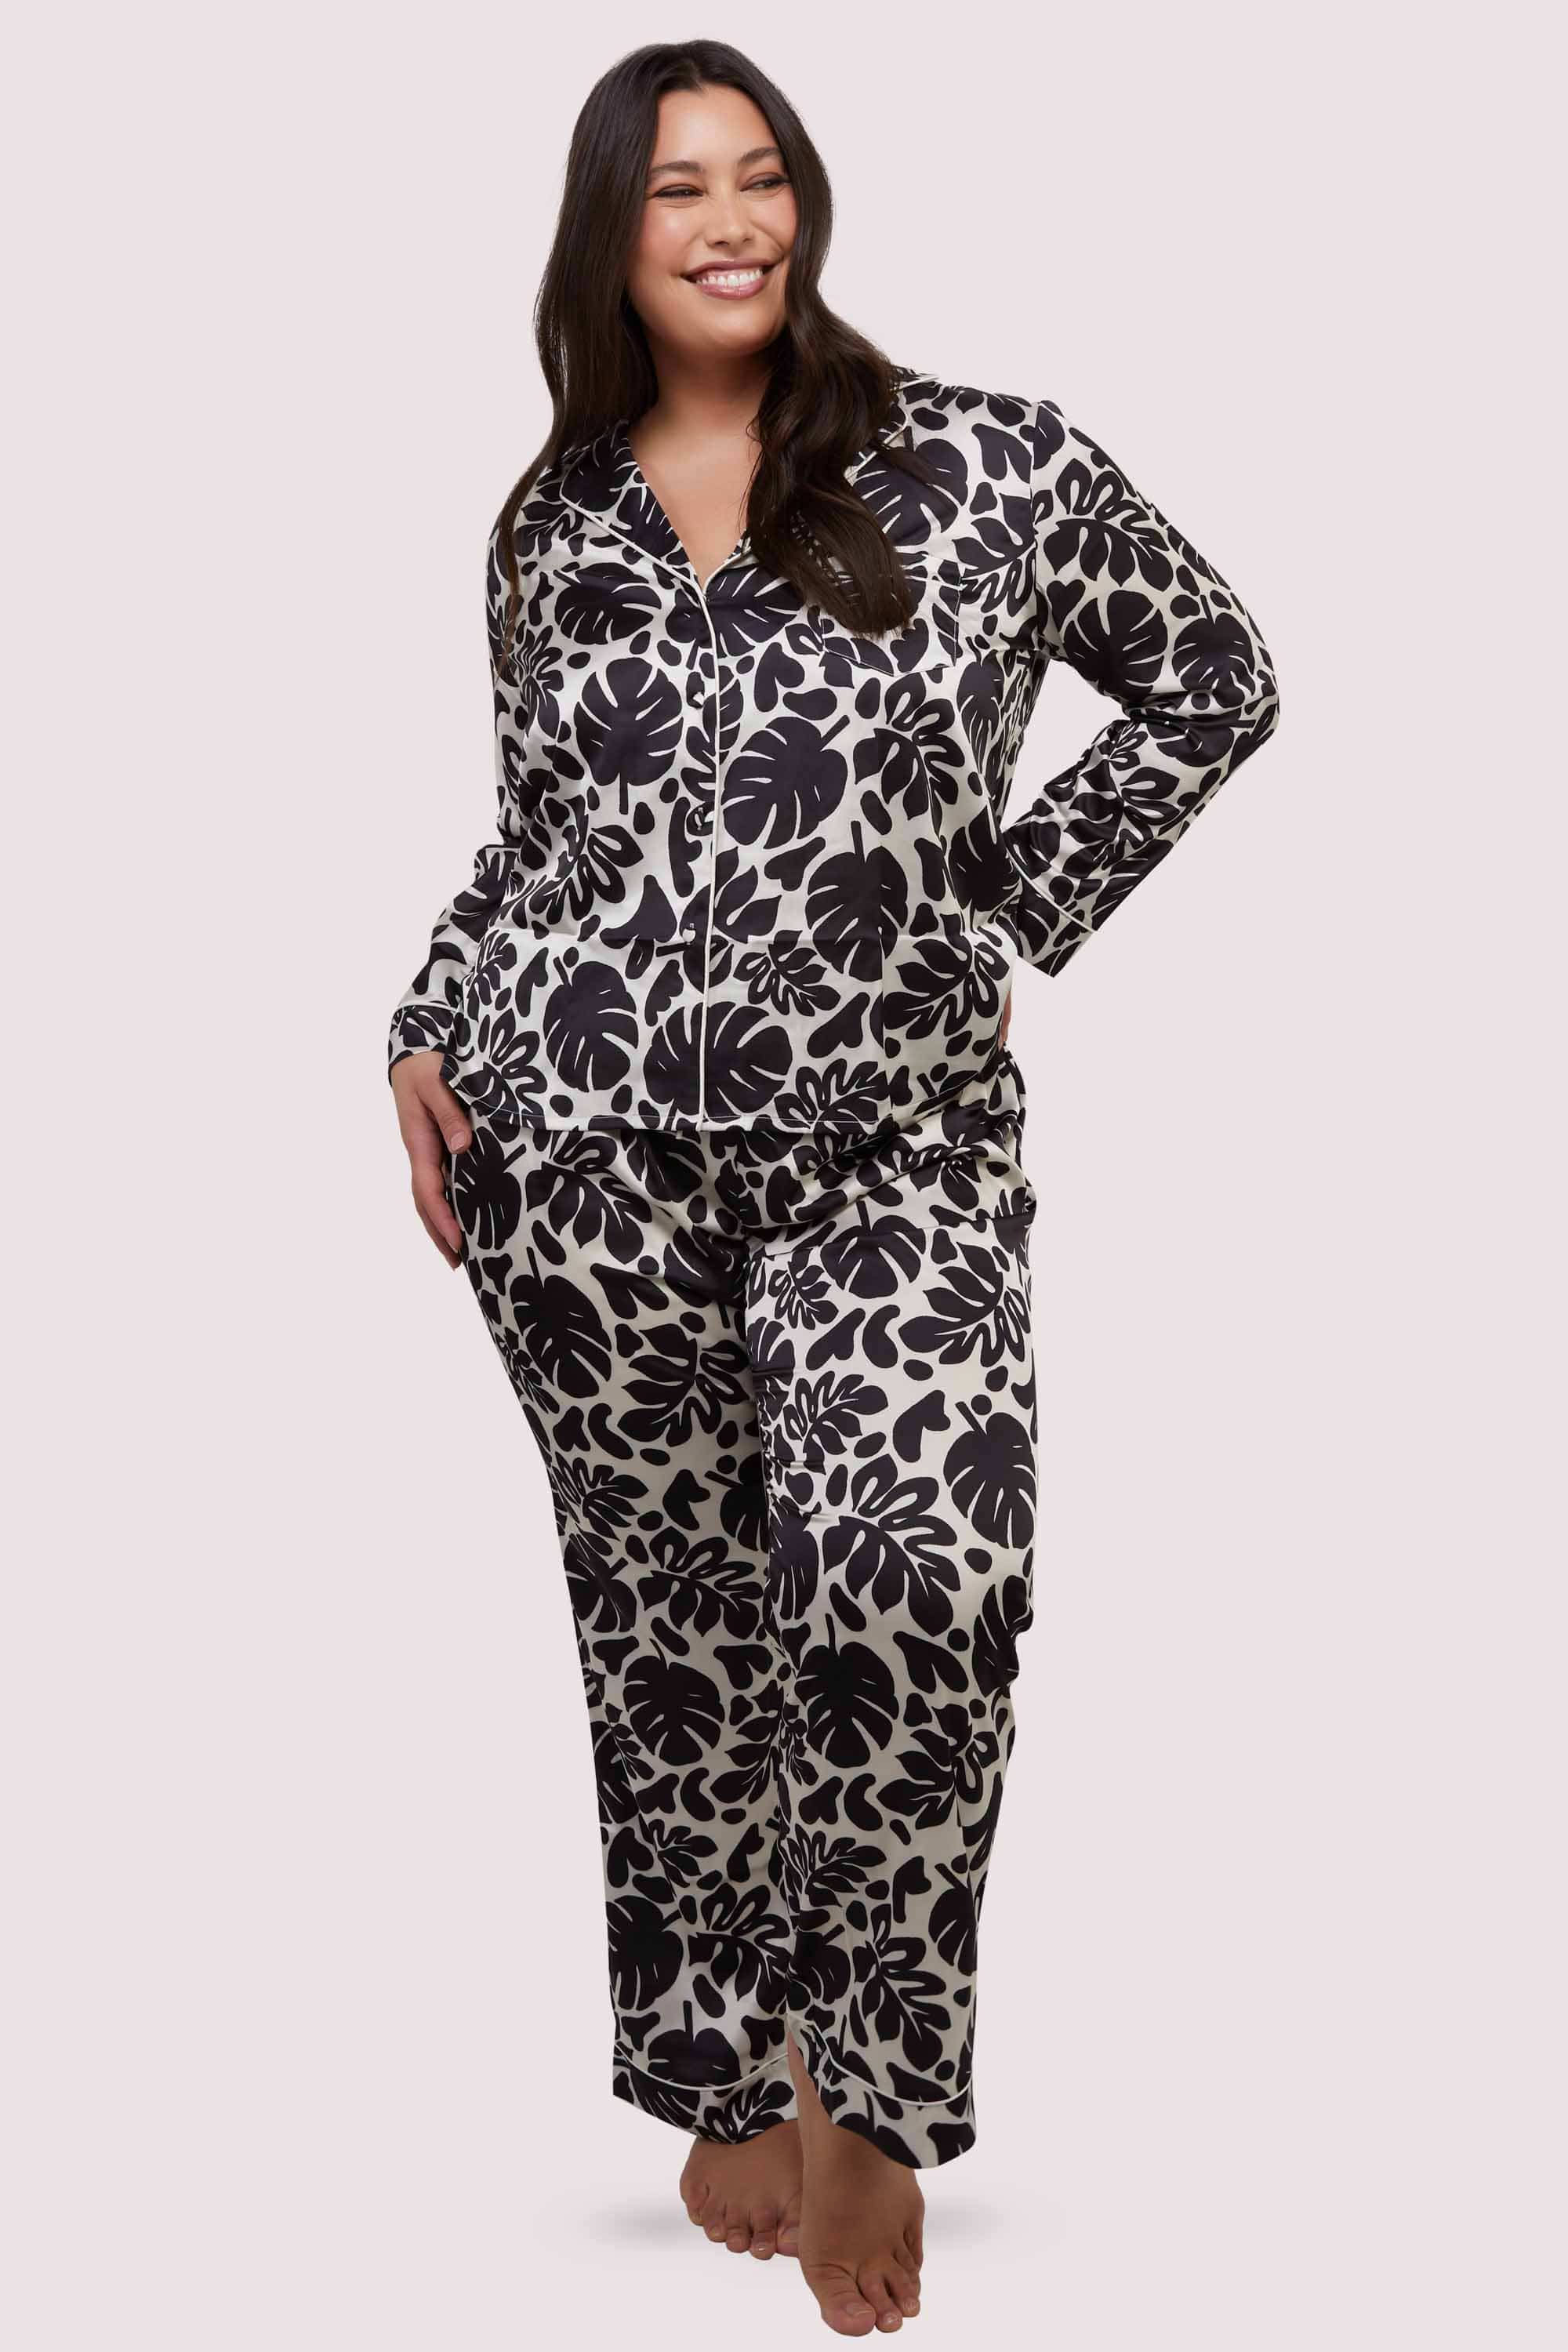 model wears black and white leaf print pyjamas